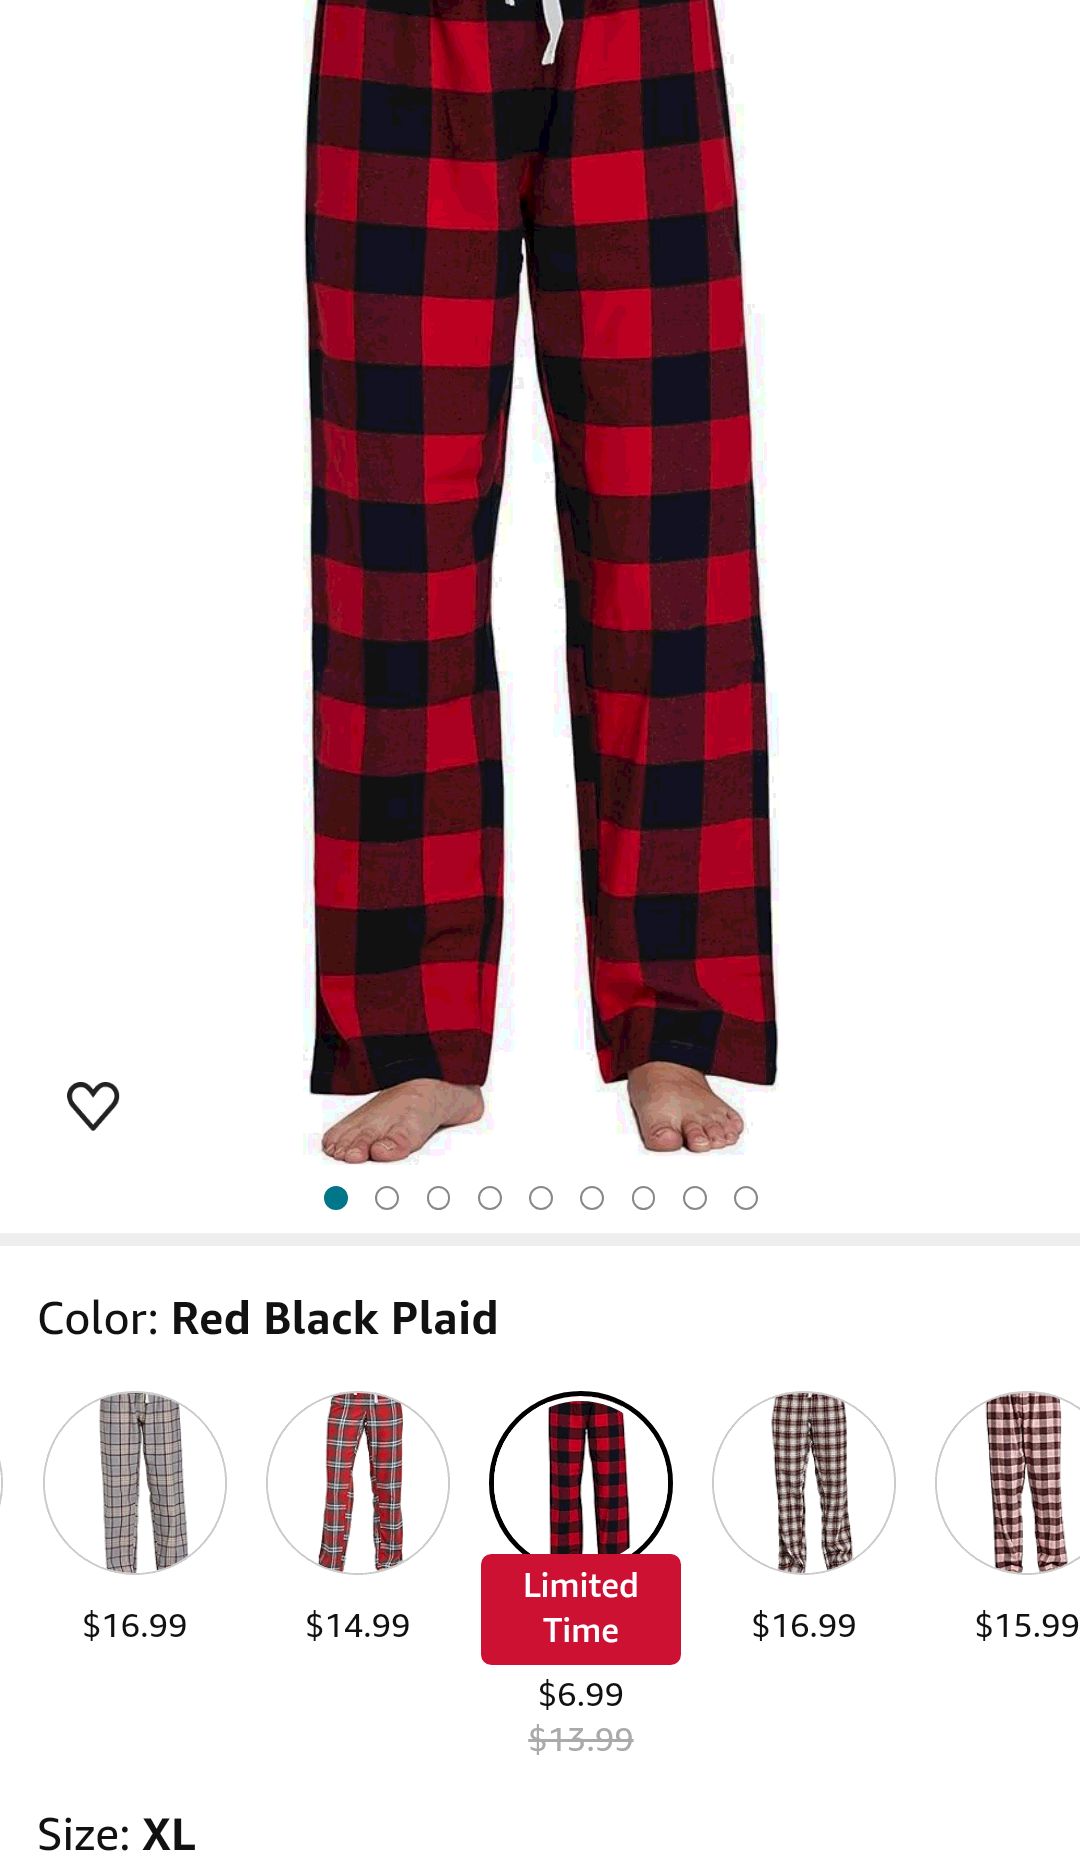 YINCOZI Women's 100% Cotton Super Soft Flannel Plaid Pajama/Lounge Pants,Red Black Plaid, 纯棉睡裤